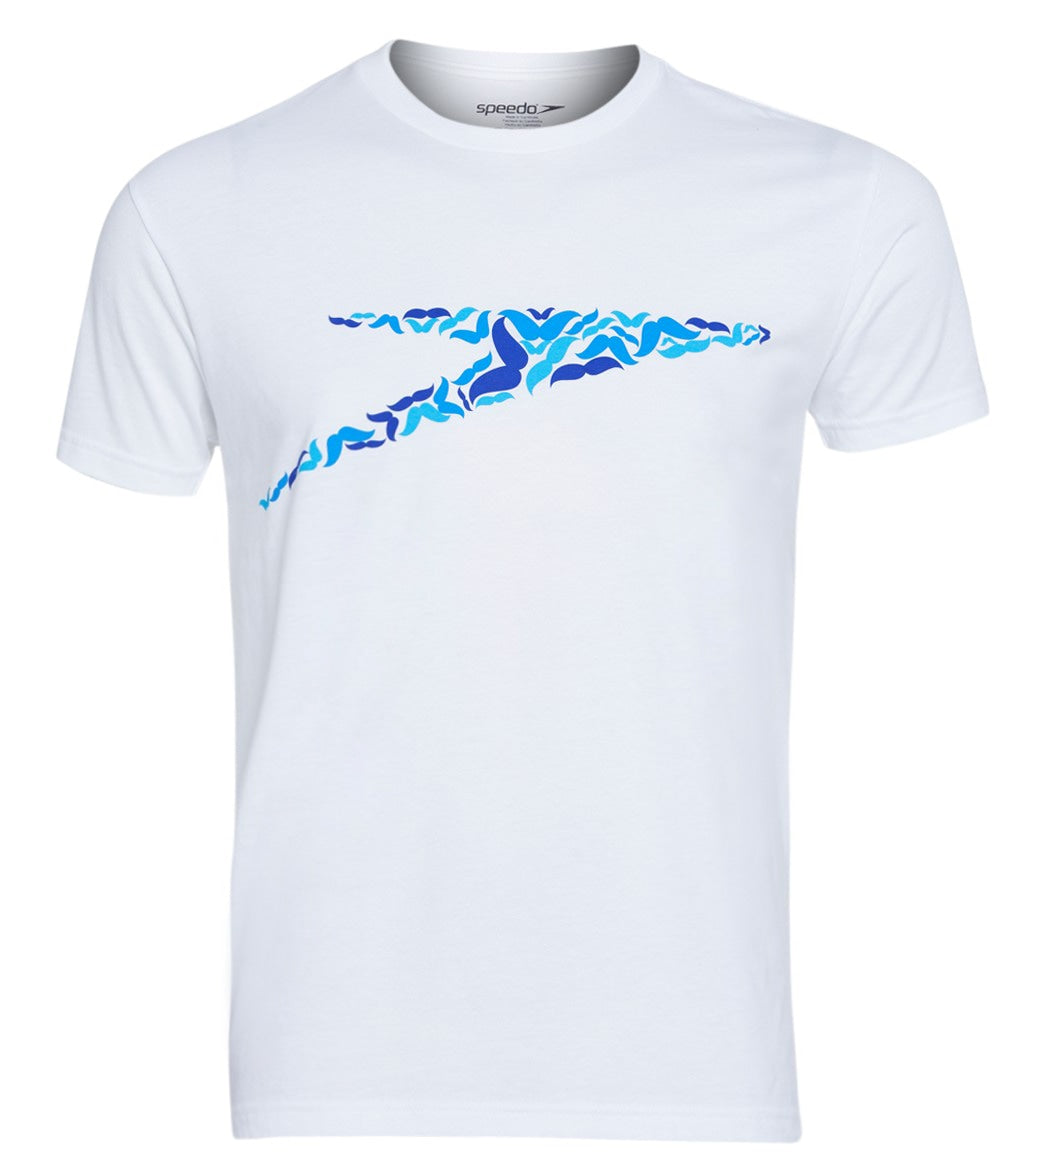 Speedo Unisex Graphic Tee Shirt at SwimOutlet.com